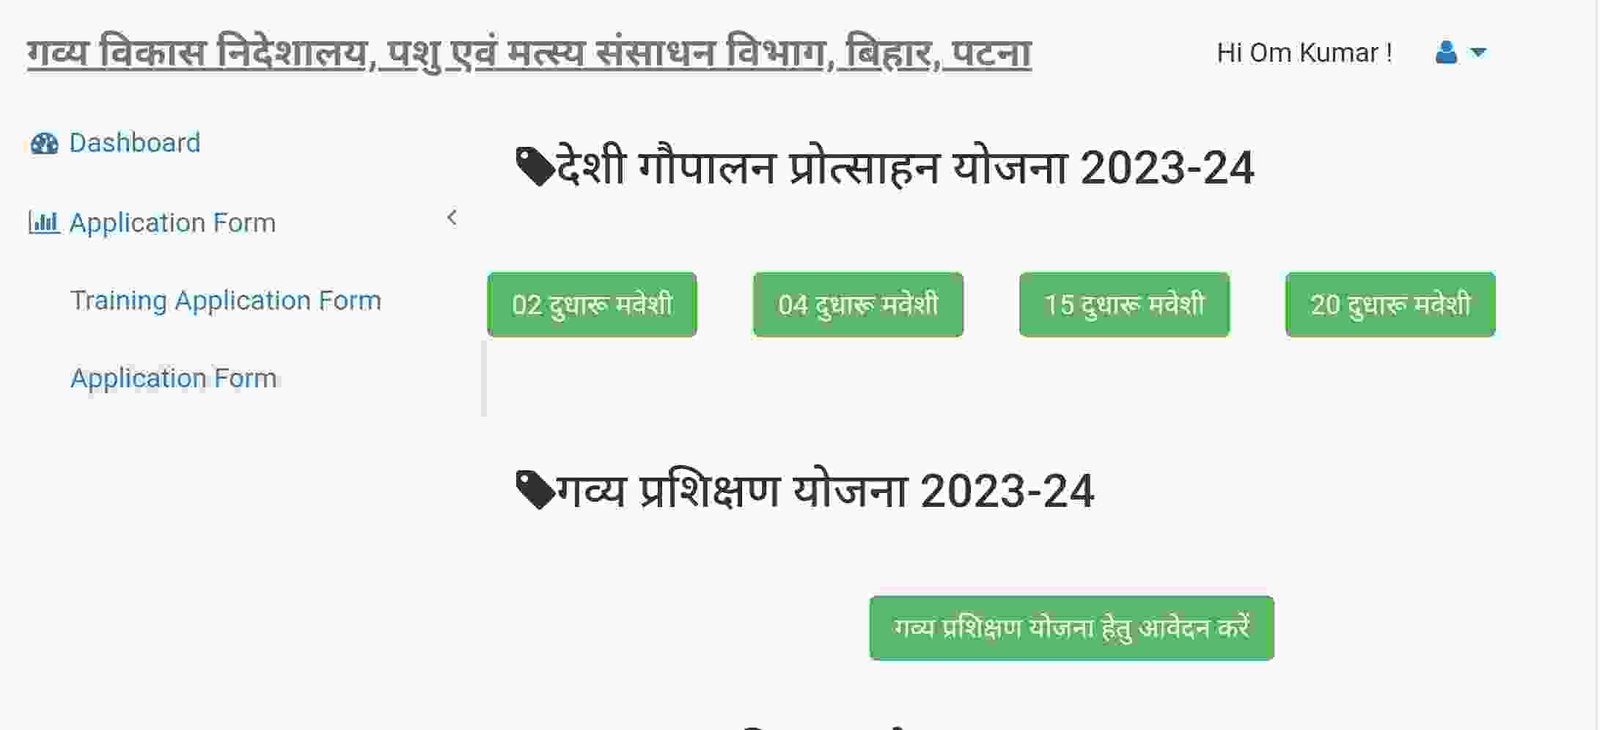 Bihar Deshi Gaupalan Protsahan Yojana 2023 Online Apply